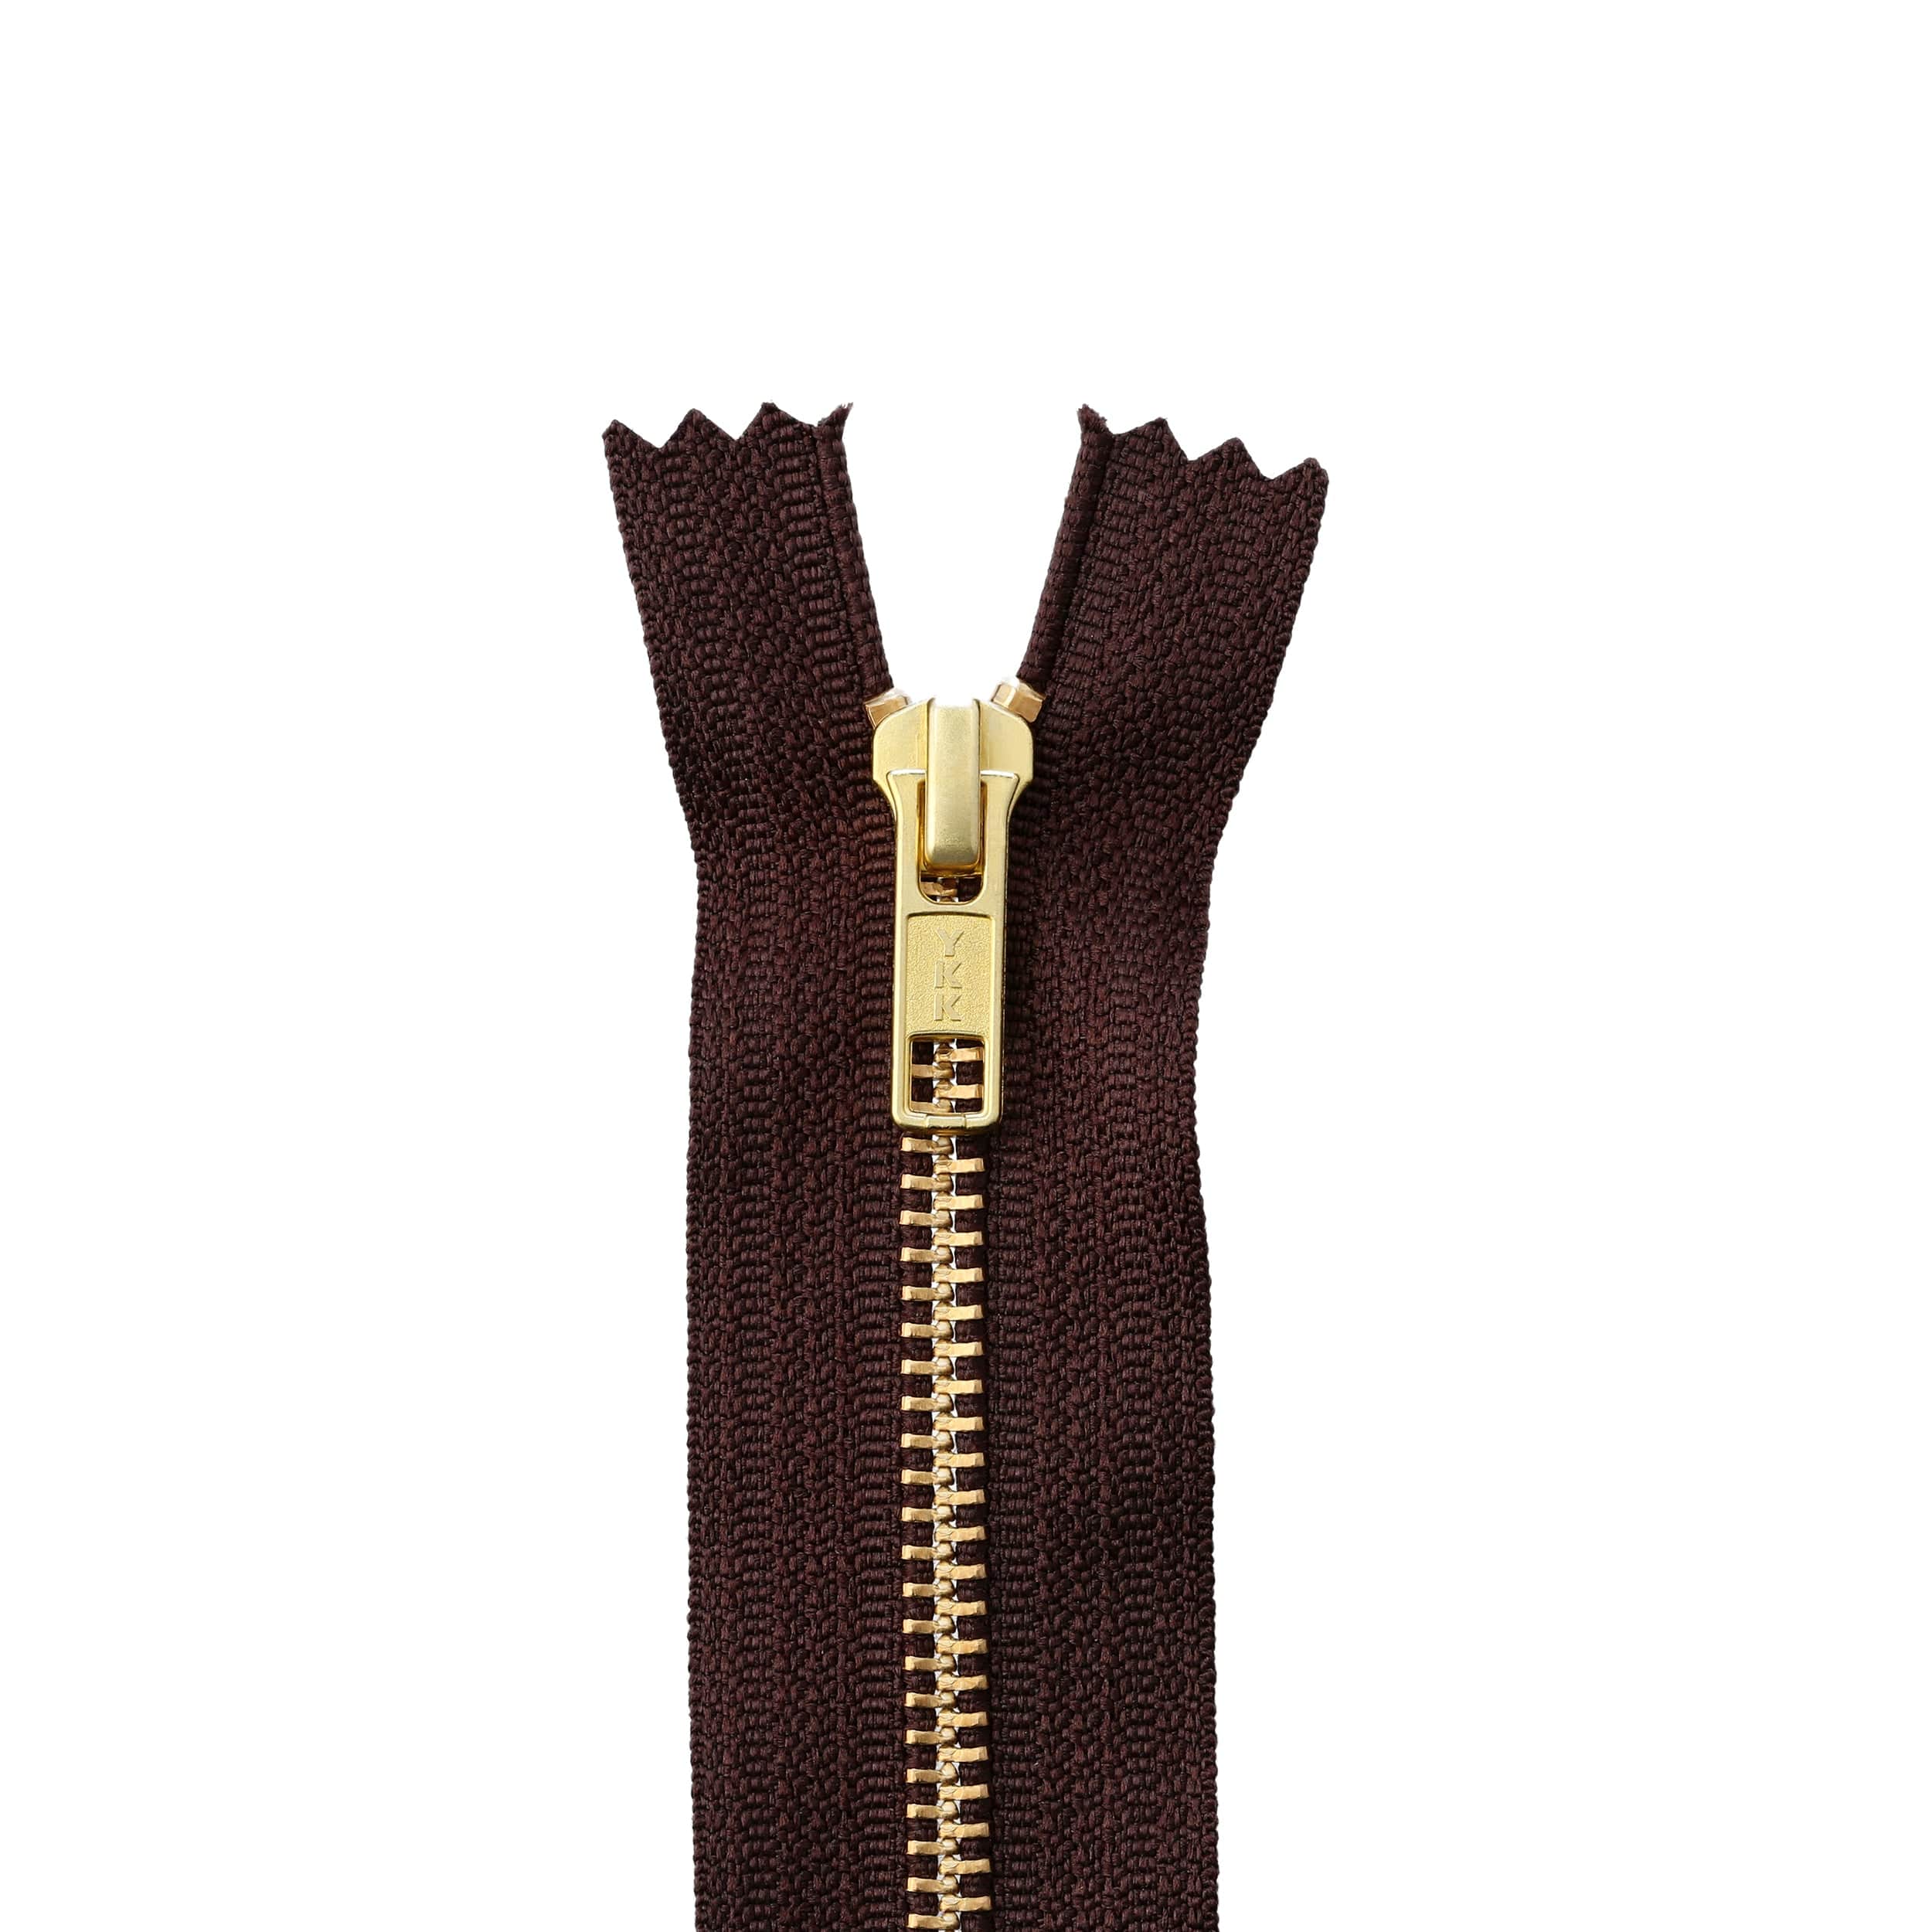 Ohio Travel Bag Zippers #6, 8"inch, Brown with Brass Teeth, Closed End Zipper, Nylon, #6CEB-8-BRO 6CEB-8-BRO